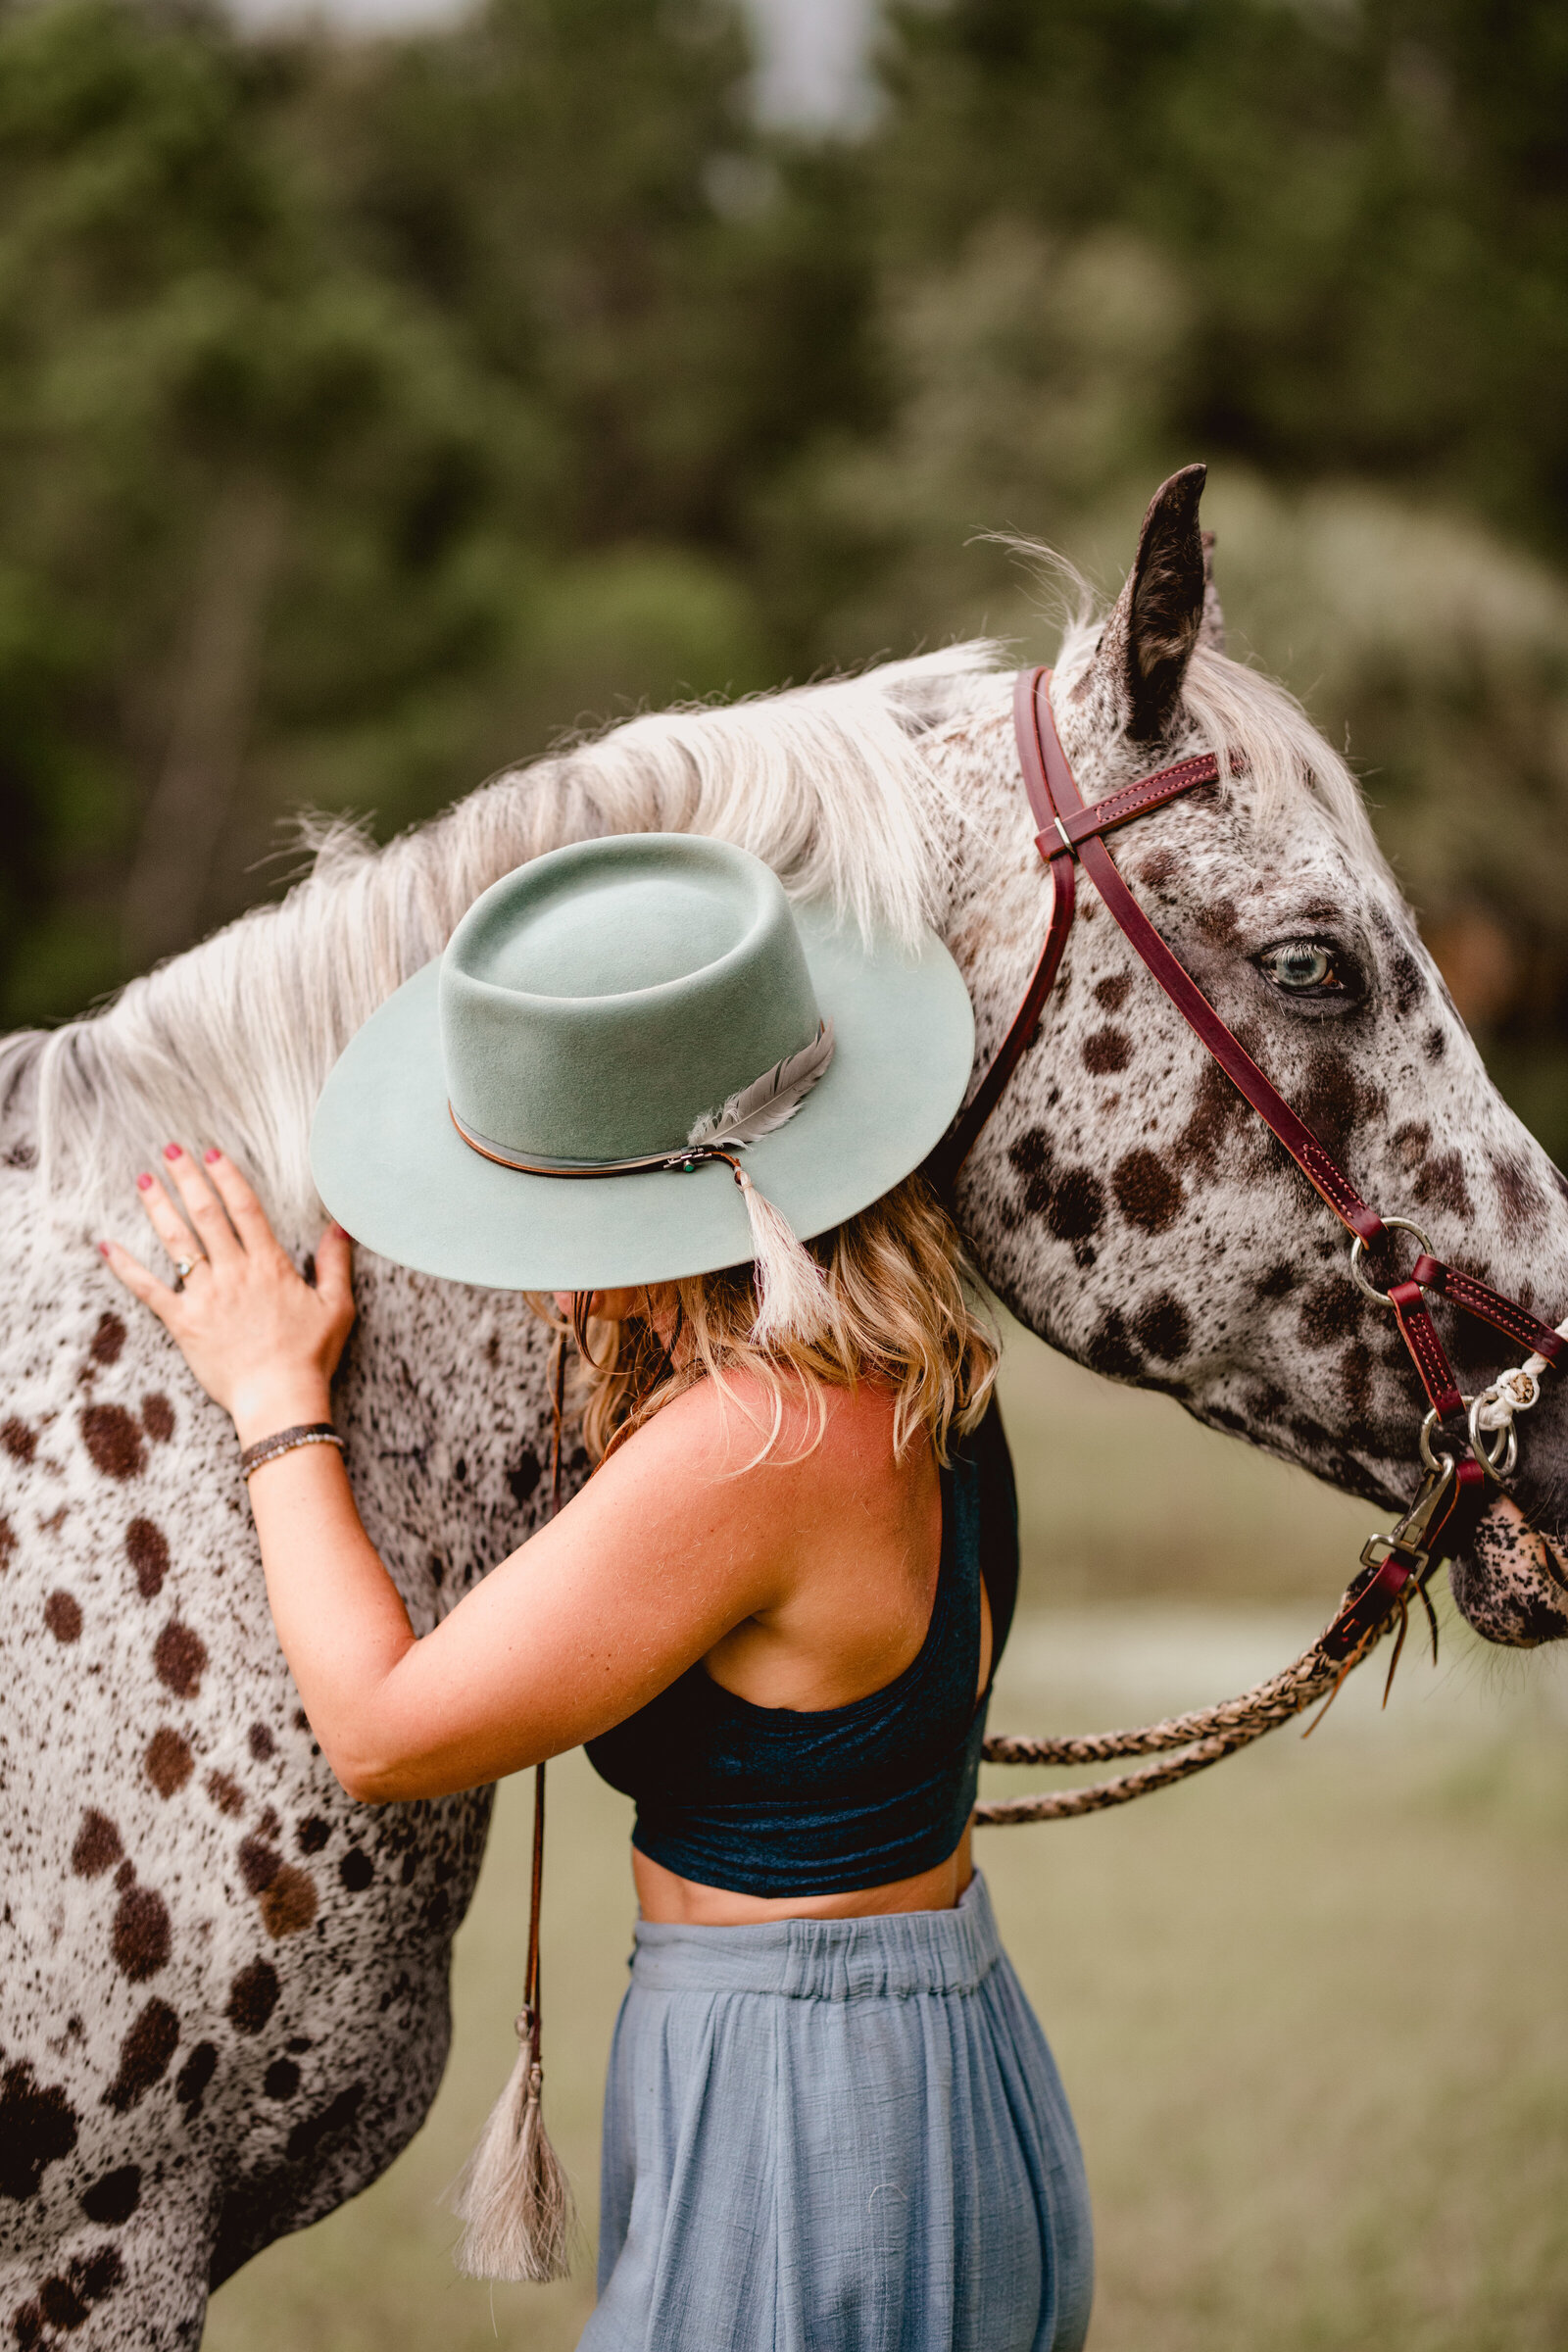 Appaloosa horse and rider portraits taken in Gainesville, FL.